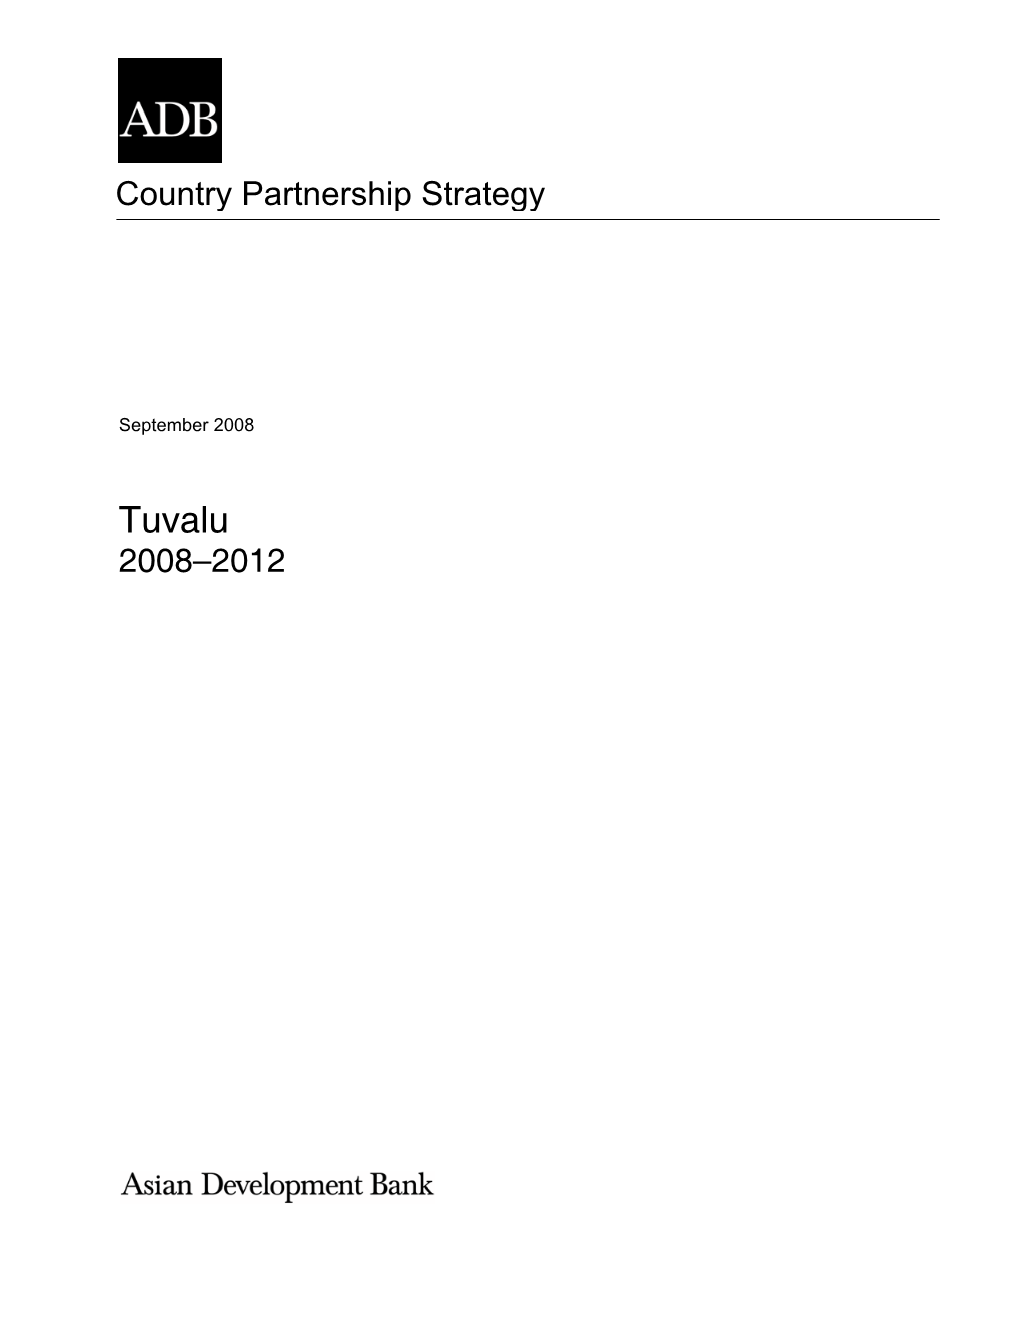 Country Partnership Strategy: Tuvalu 2008-2012